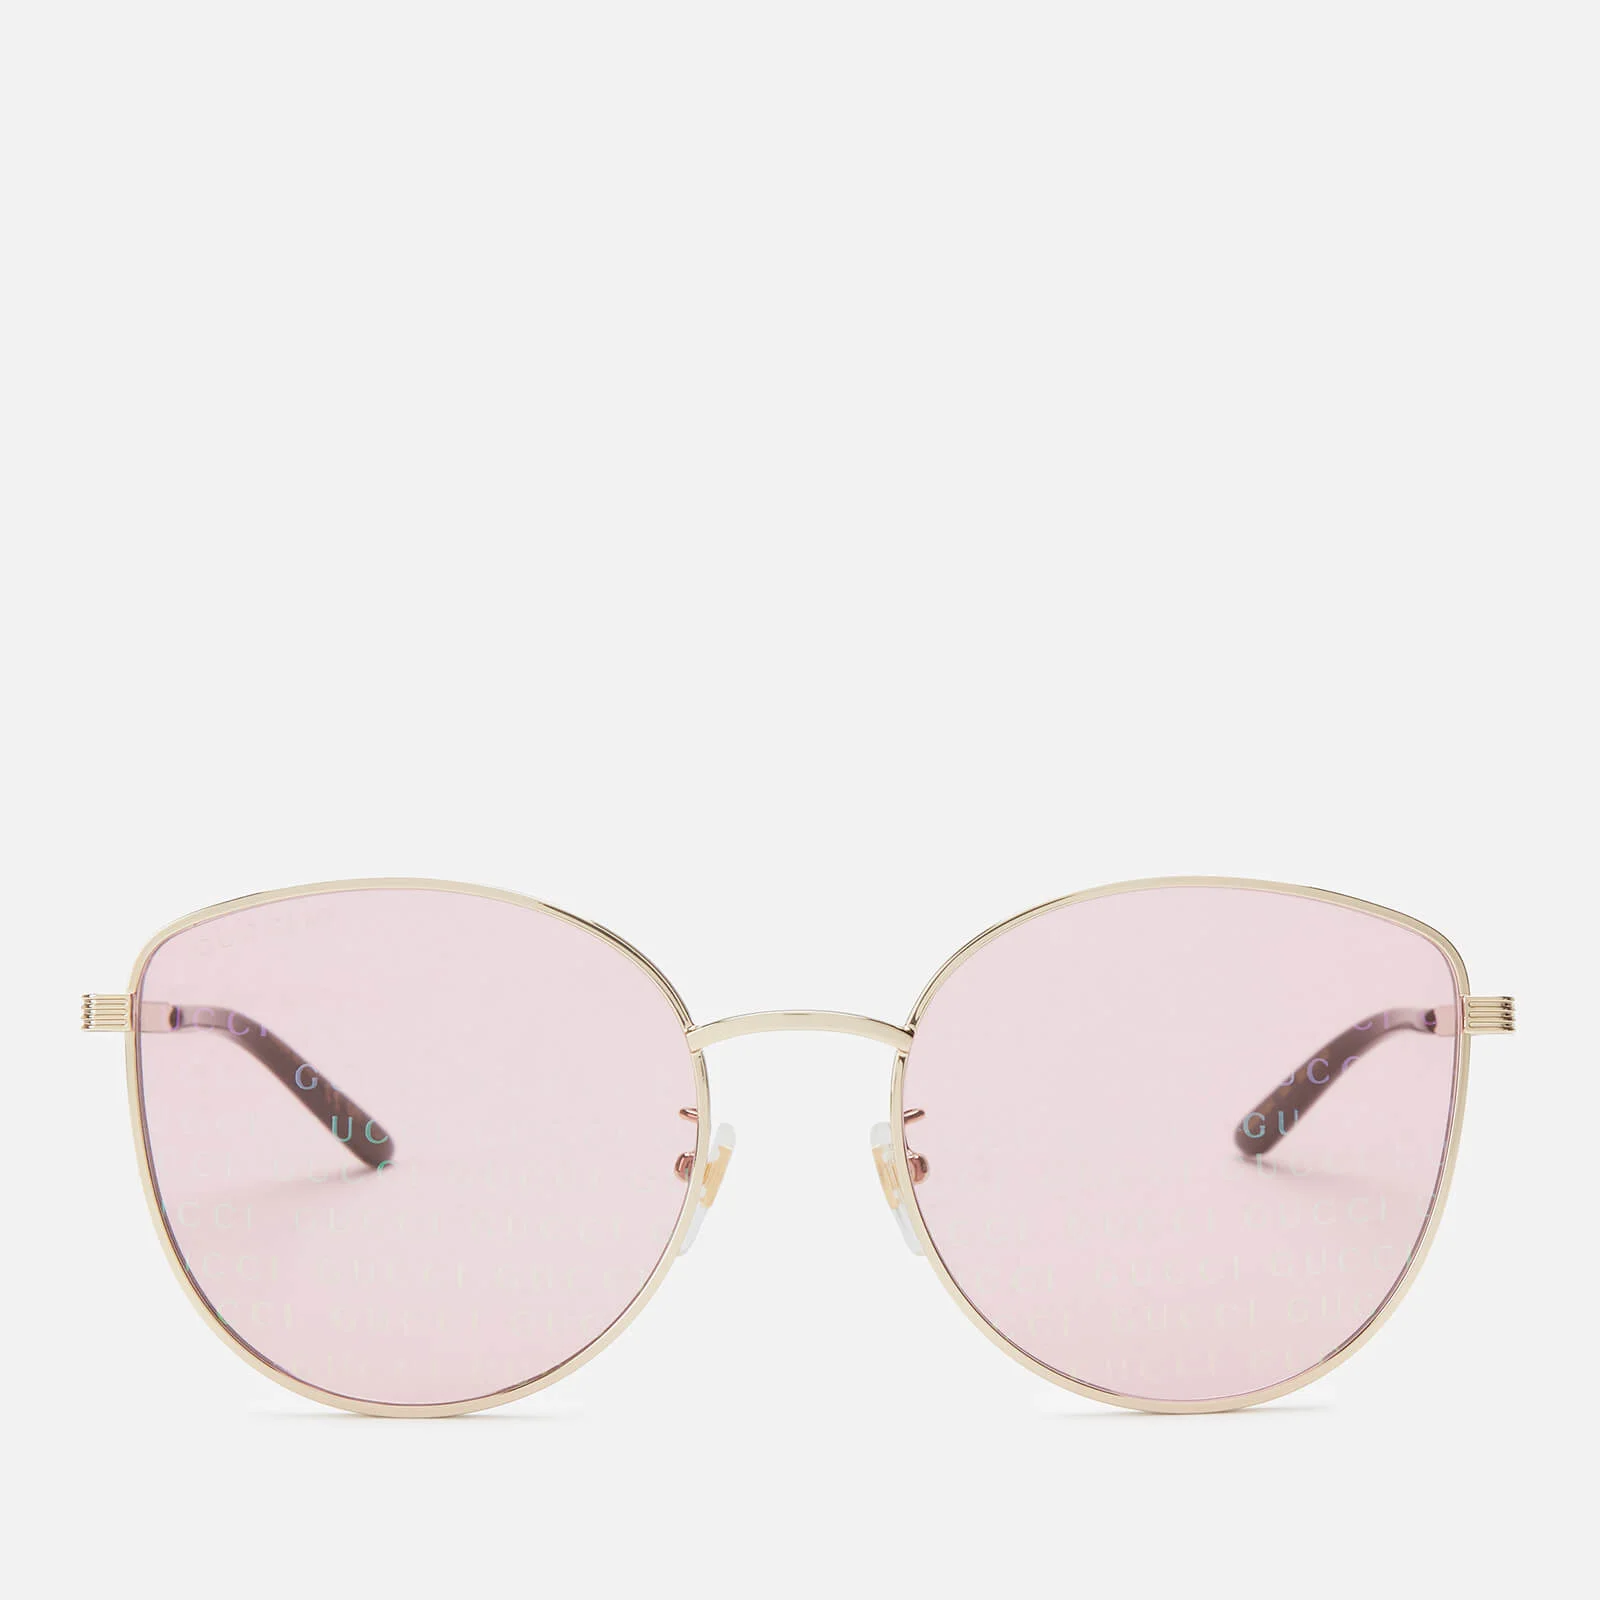 Gucci Women's Monogram Sunglasses - Gold/Pink Image 1